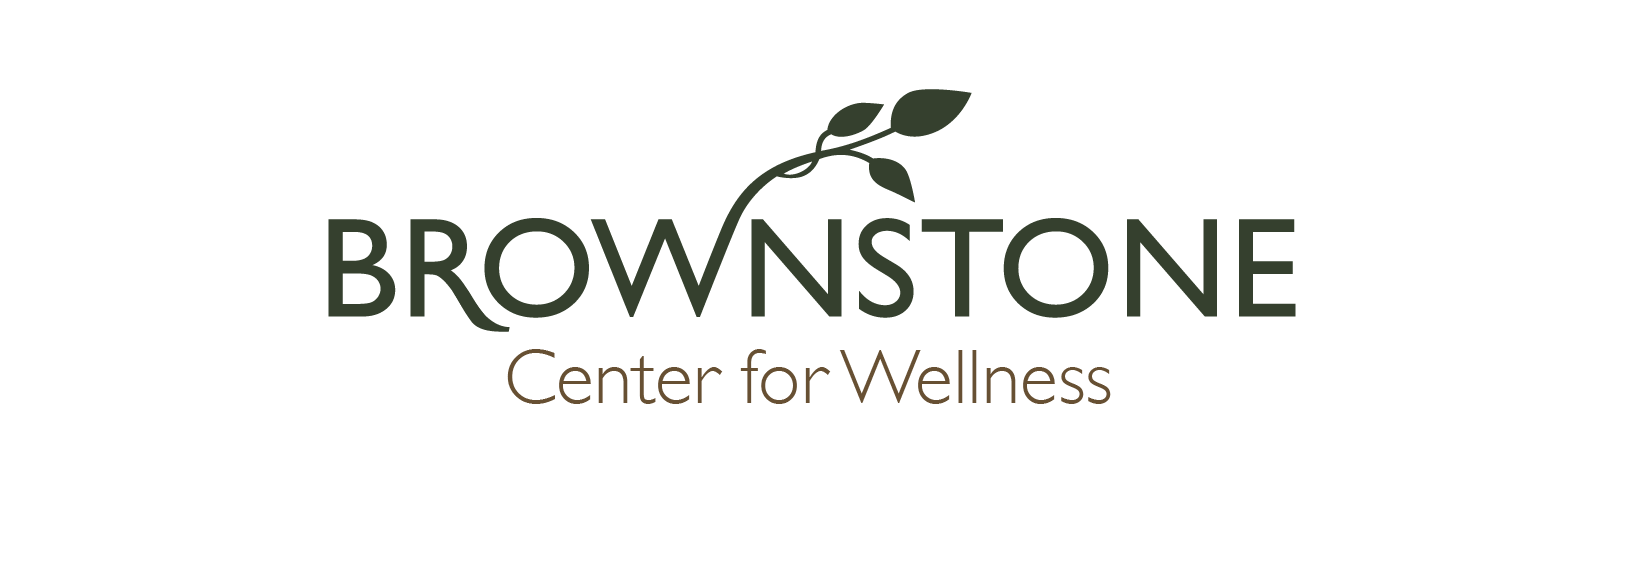 Brownstone Wellness Center